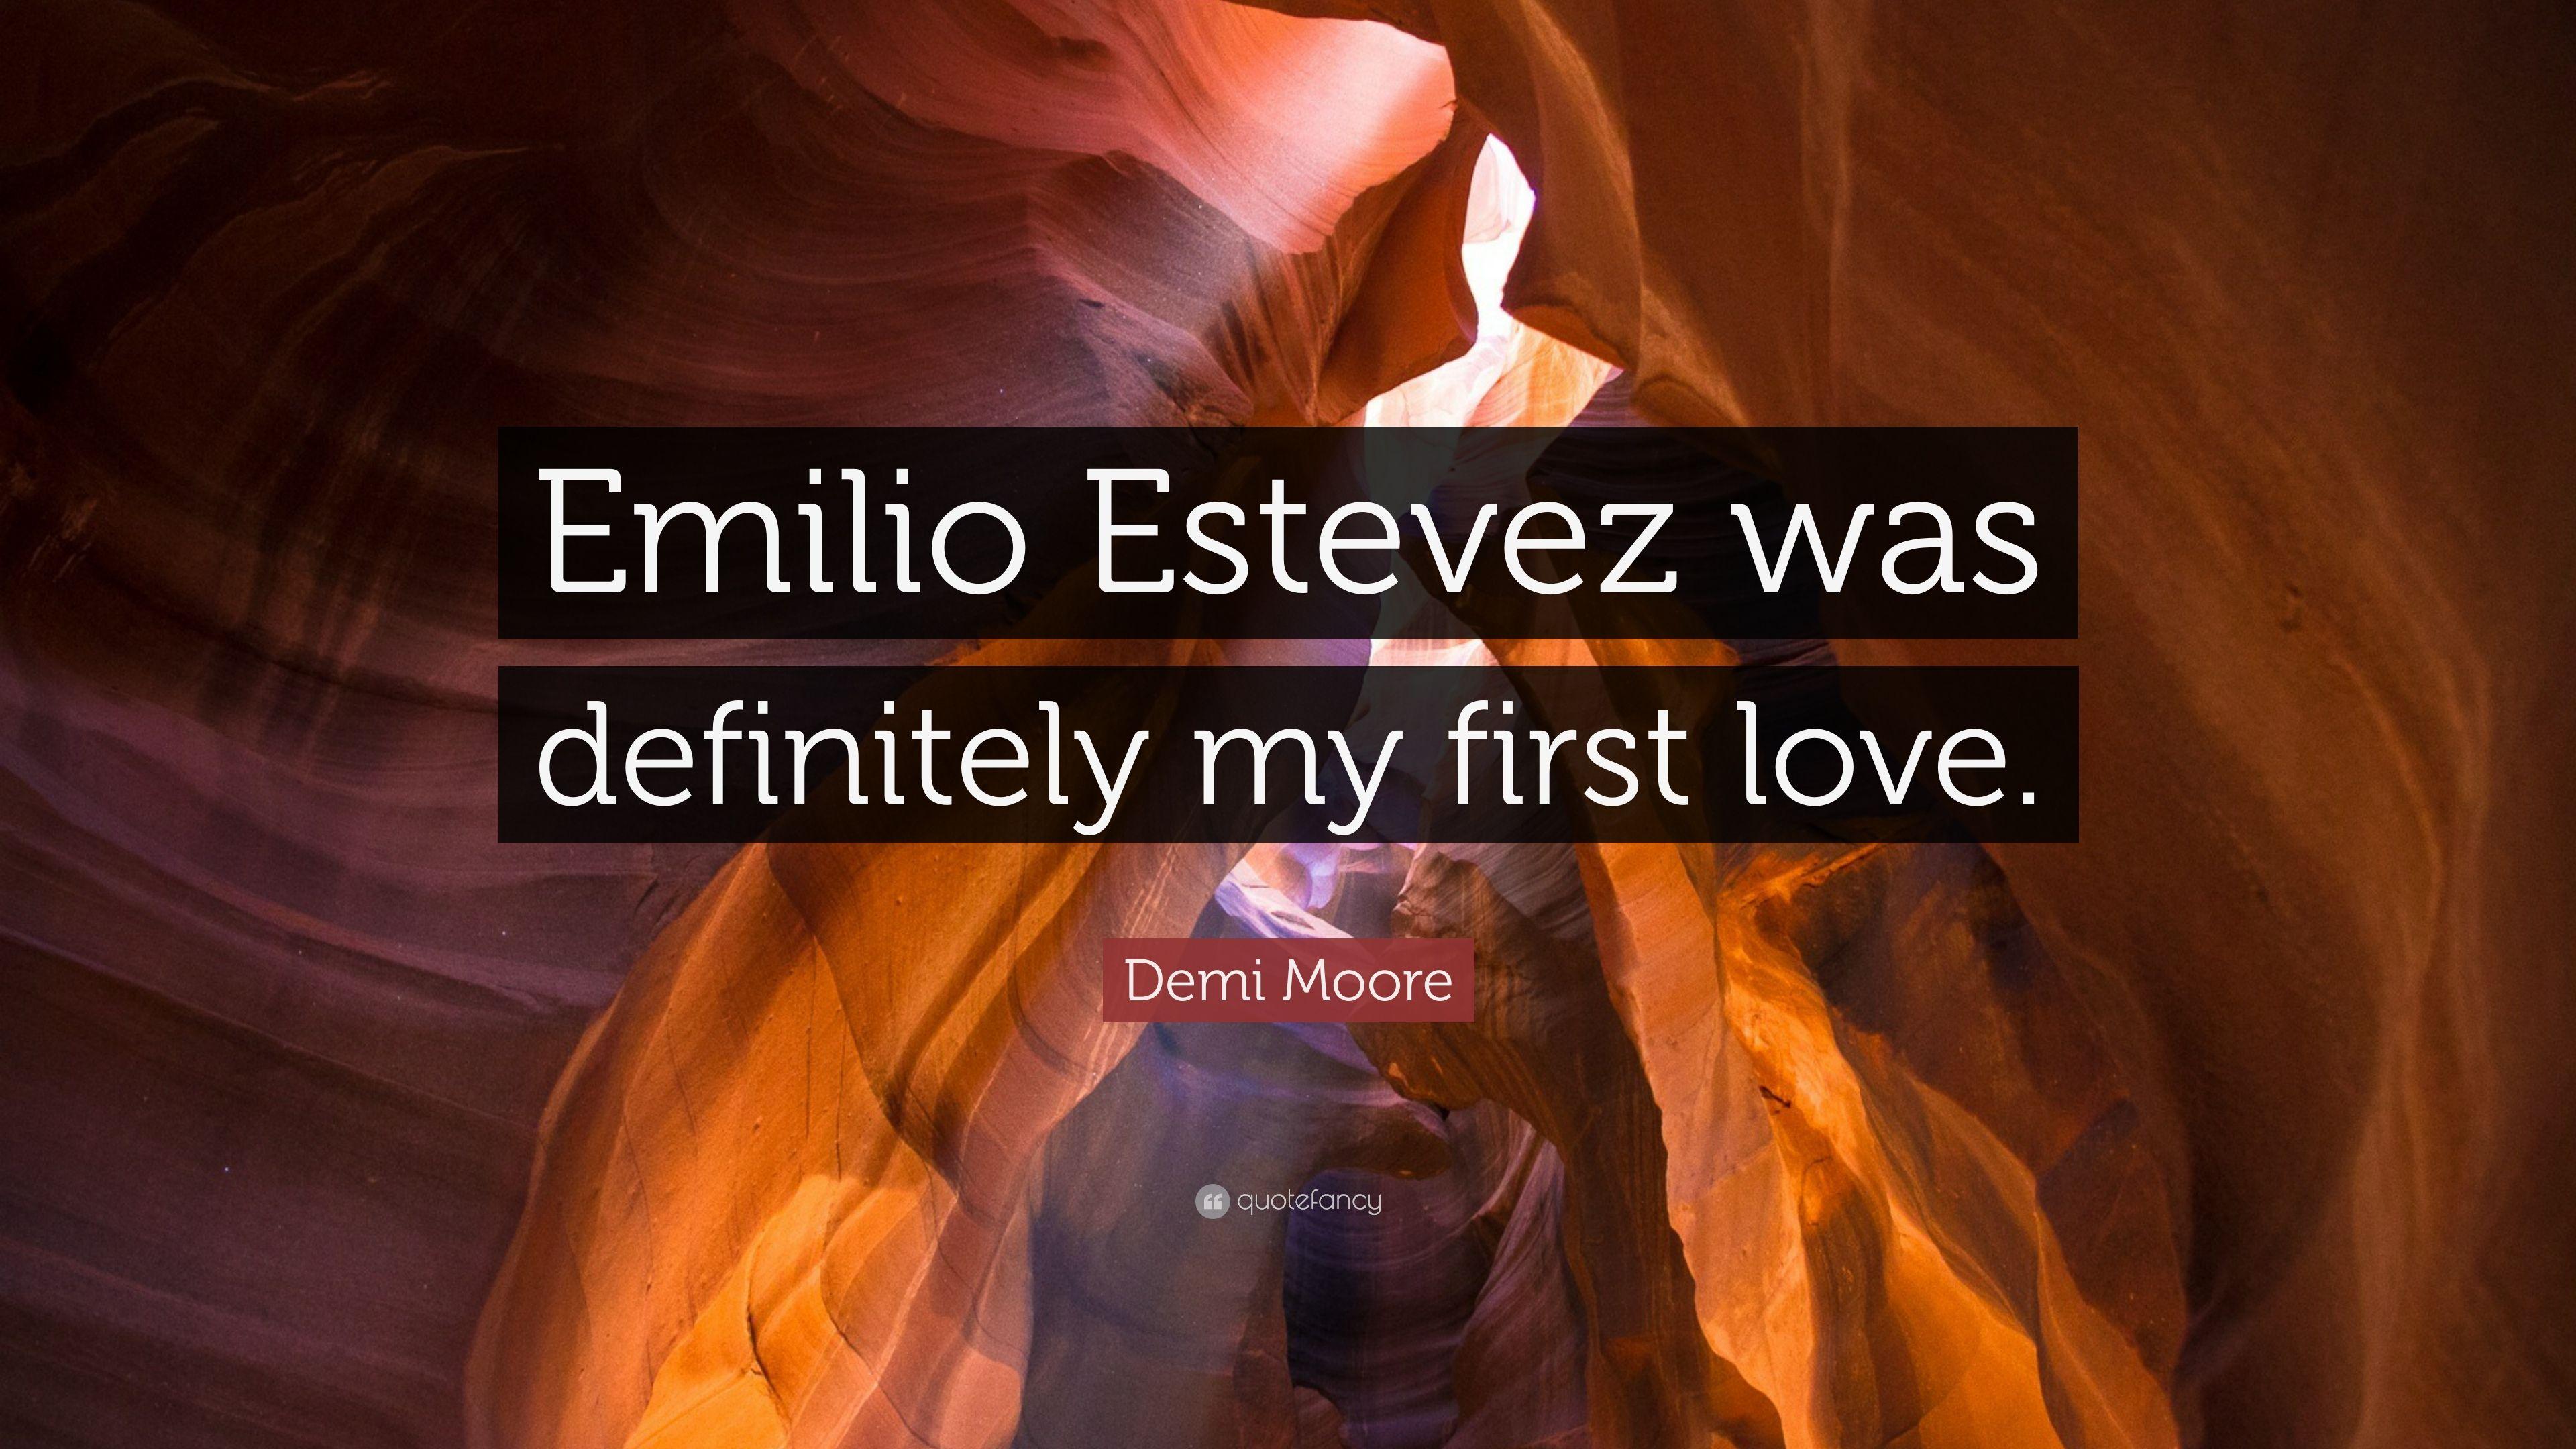 Demi Moore Quote: “Emilio Estevez was definitely my first love.” 7